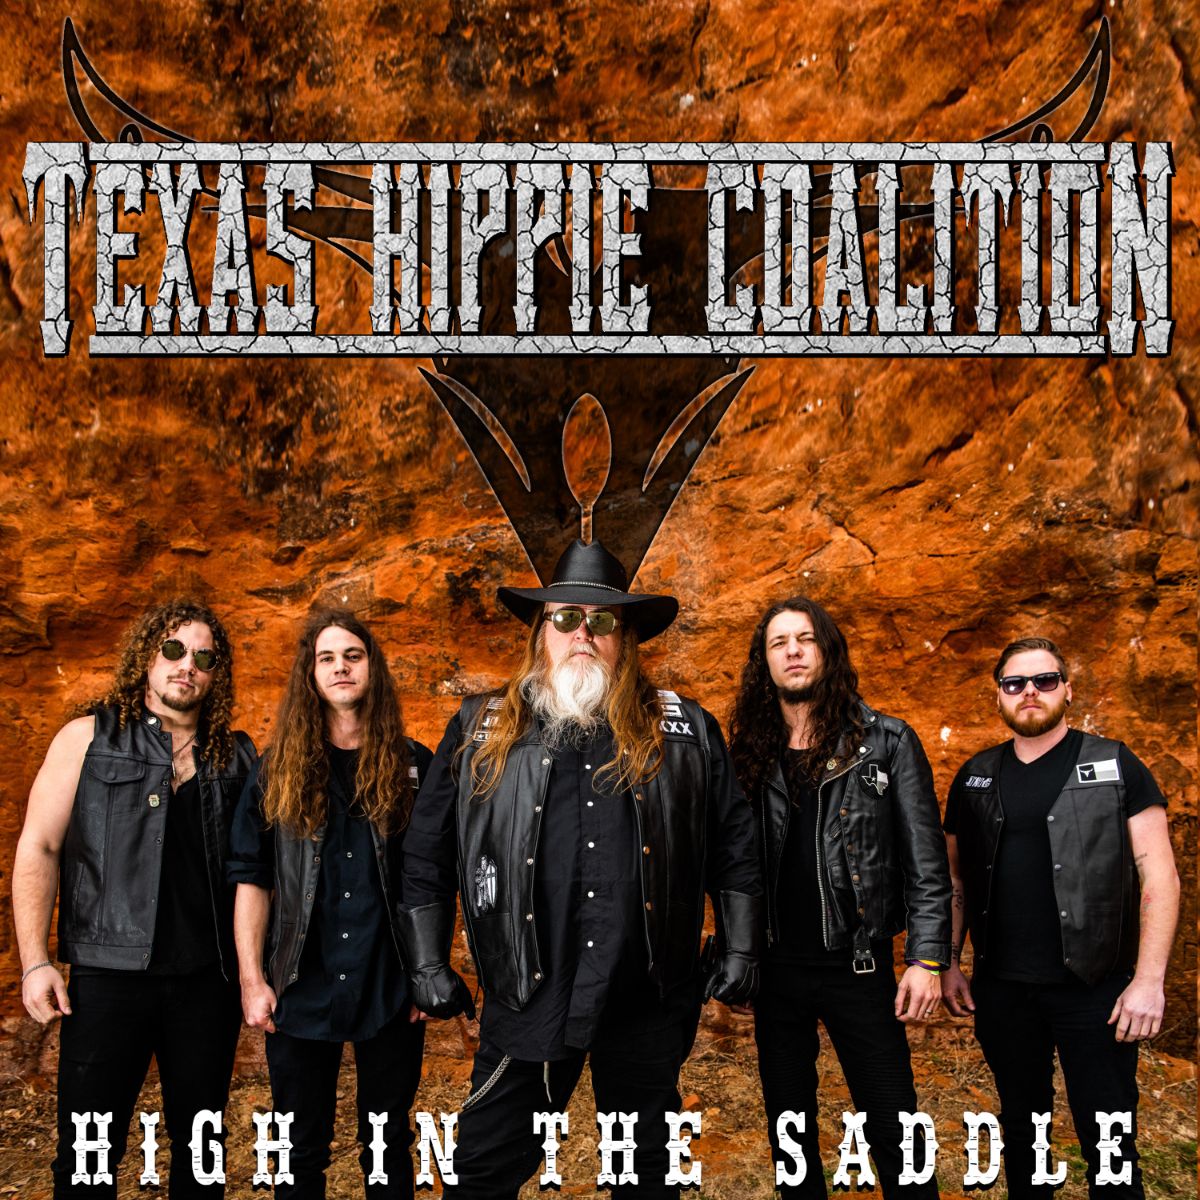 Texas Hippie Coalition Release "Moonshine" Video